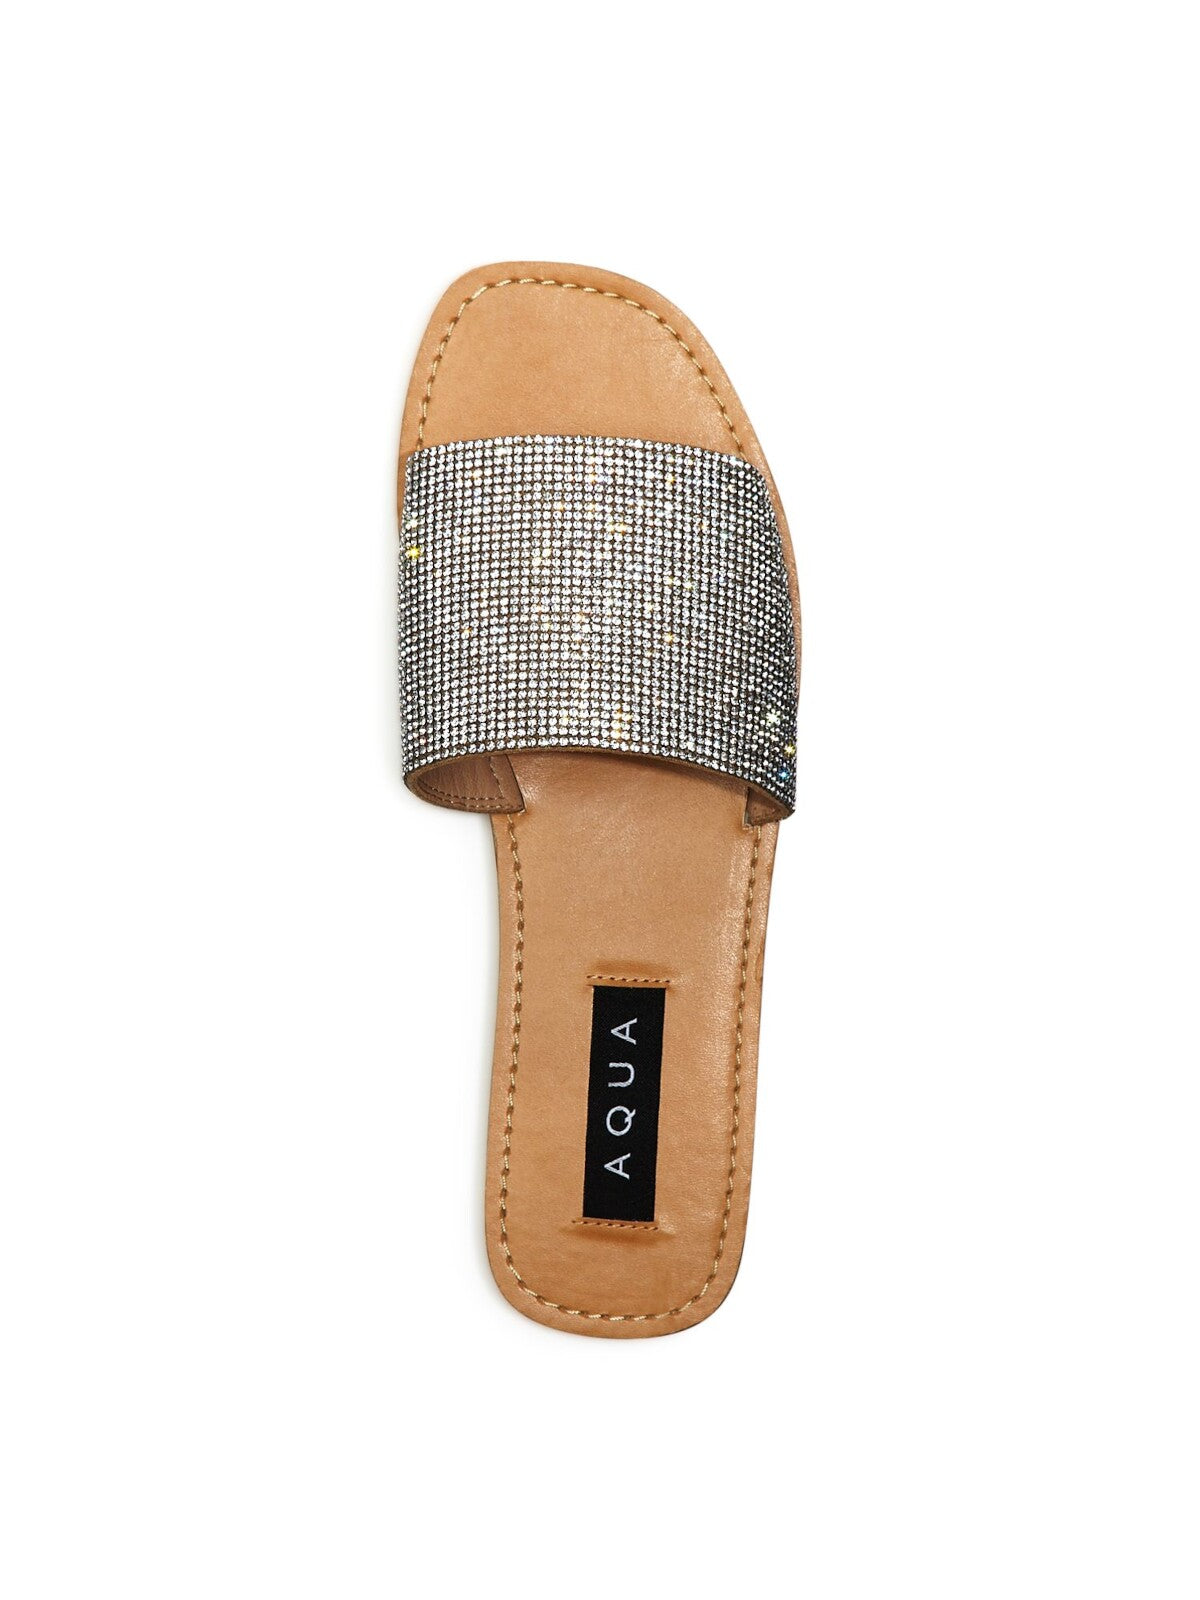 AQUA Womens Beige Embellished Shine Round Toe Slip On Slide Sandals Shoes M